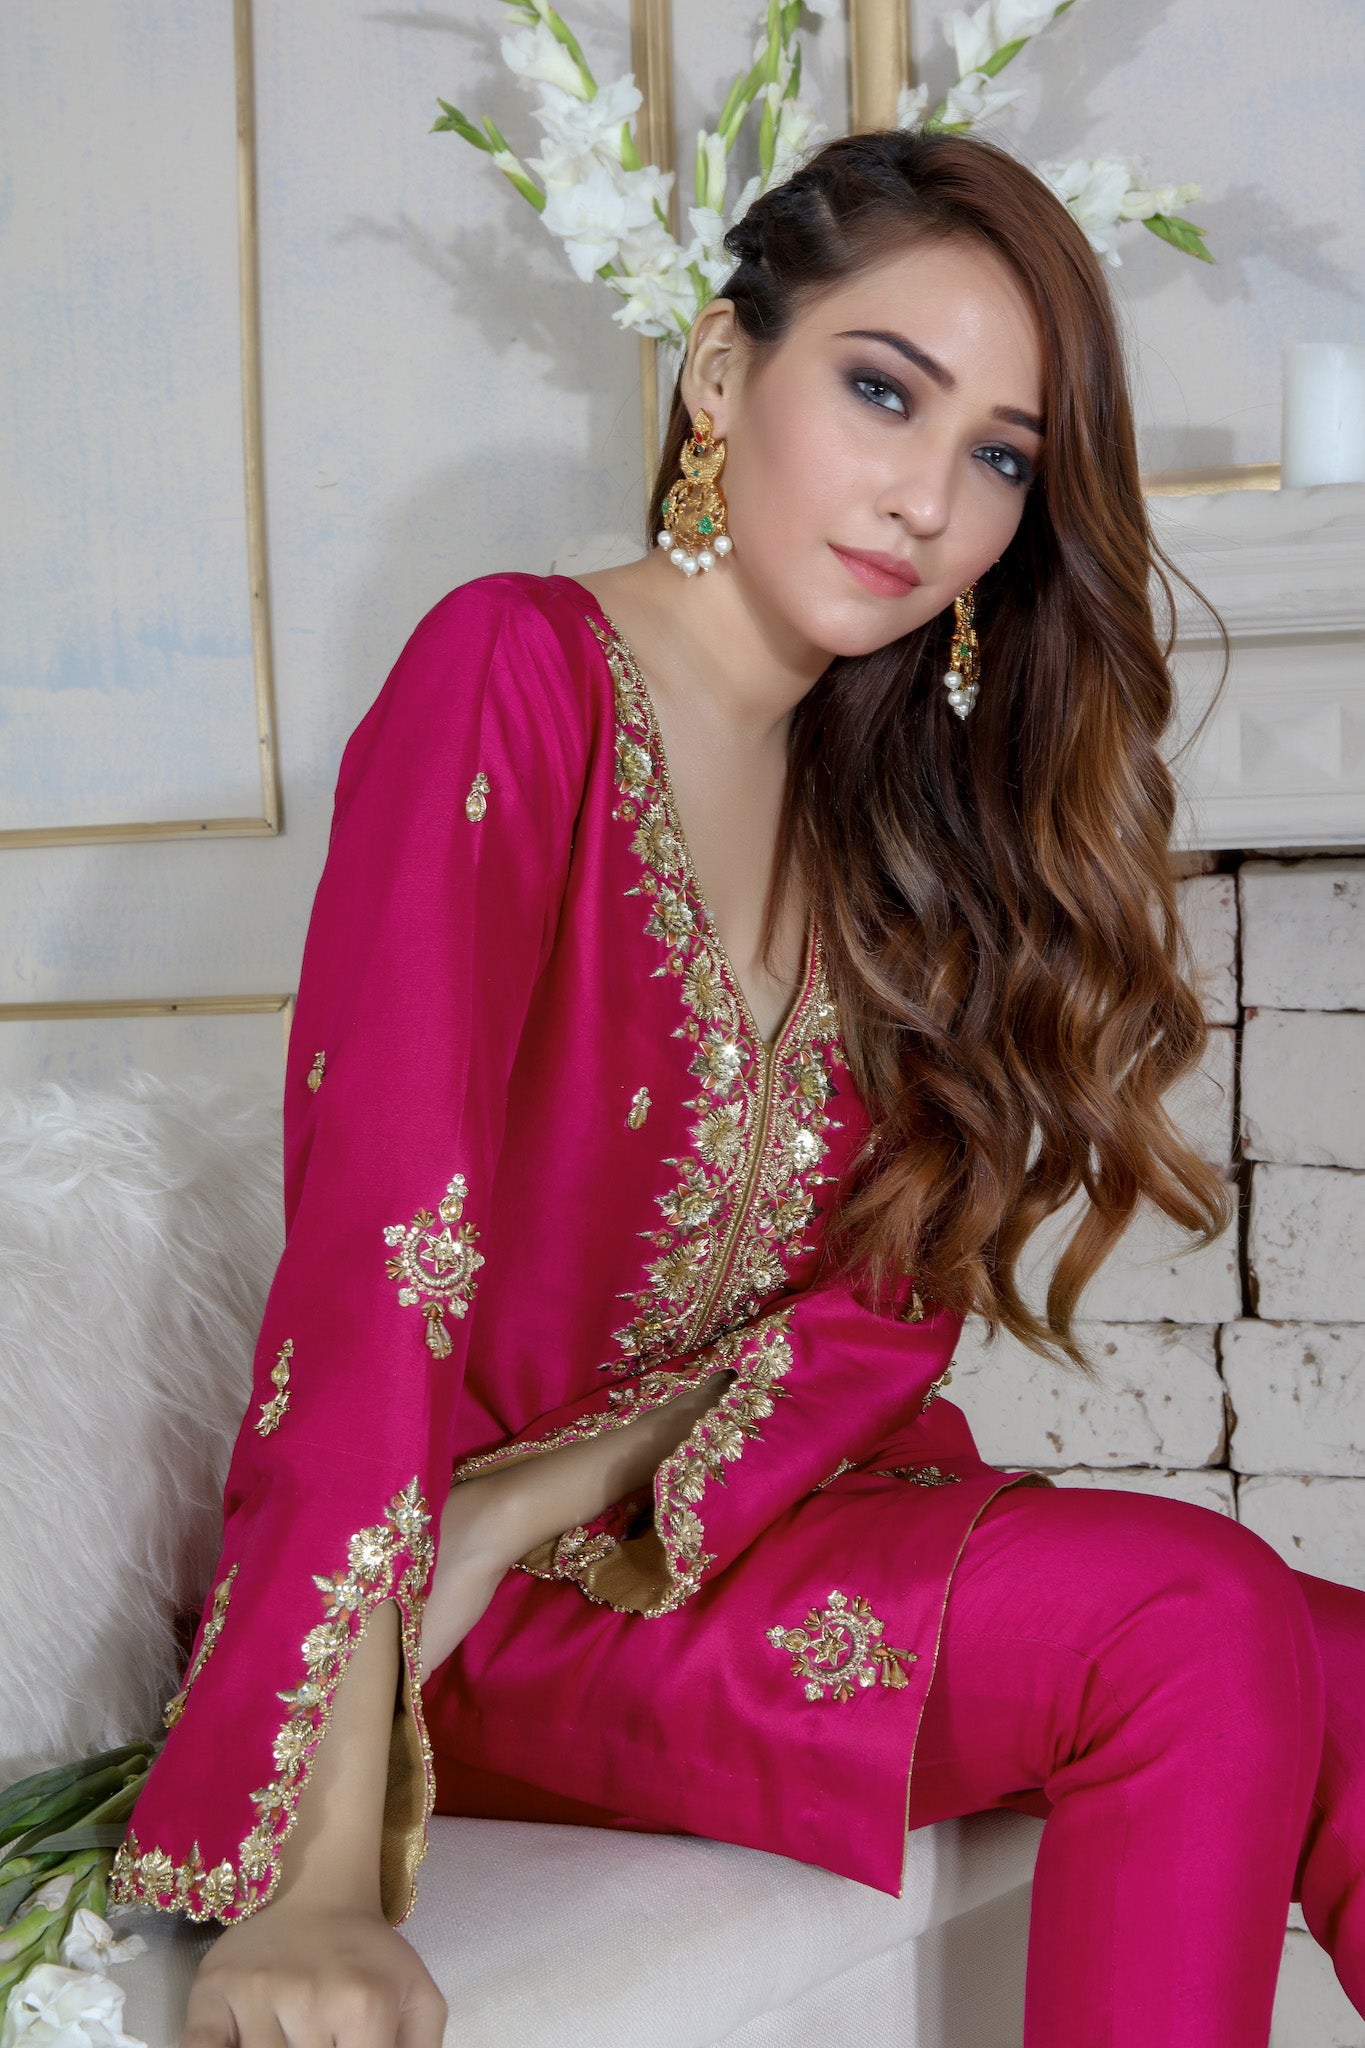 Cabaret Pink | Pakistani Designer Outfit | Sarosh Salman